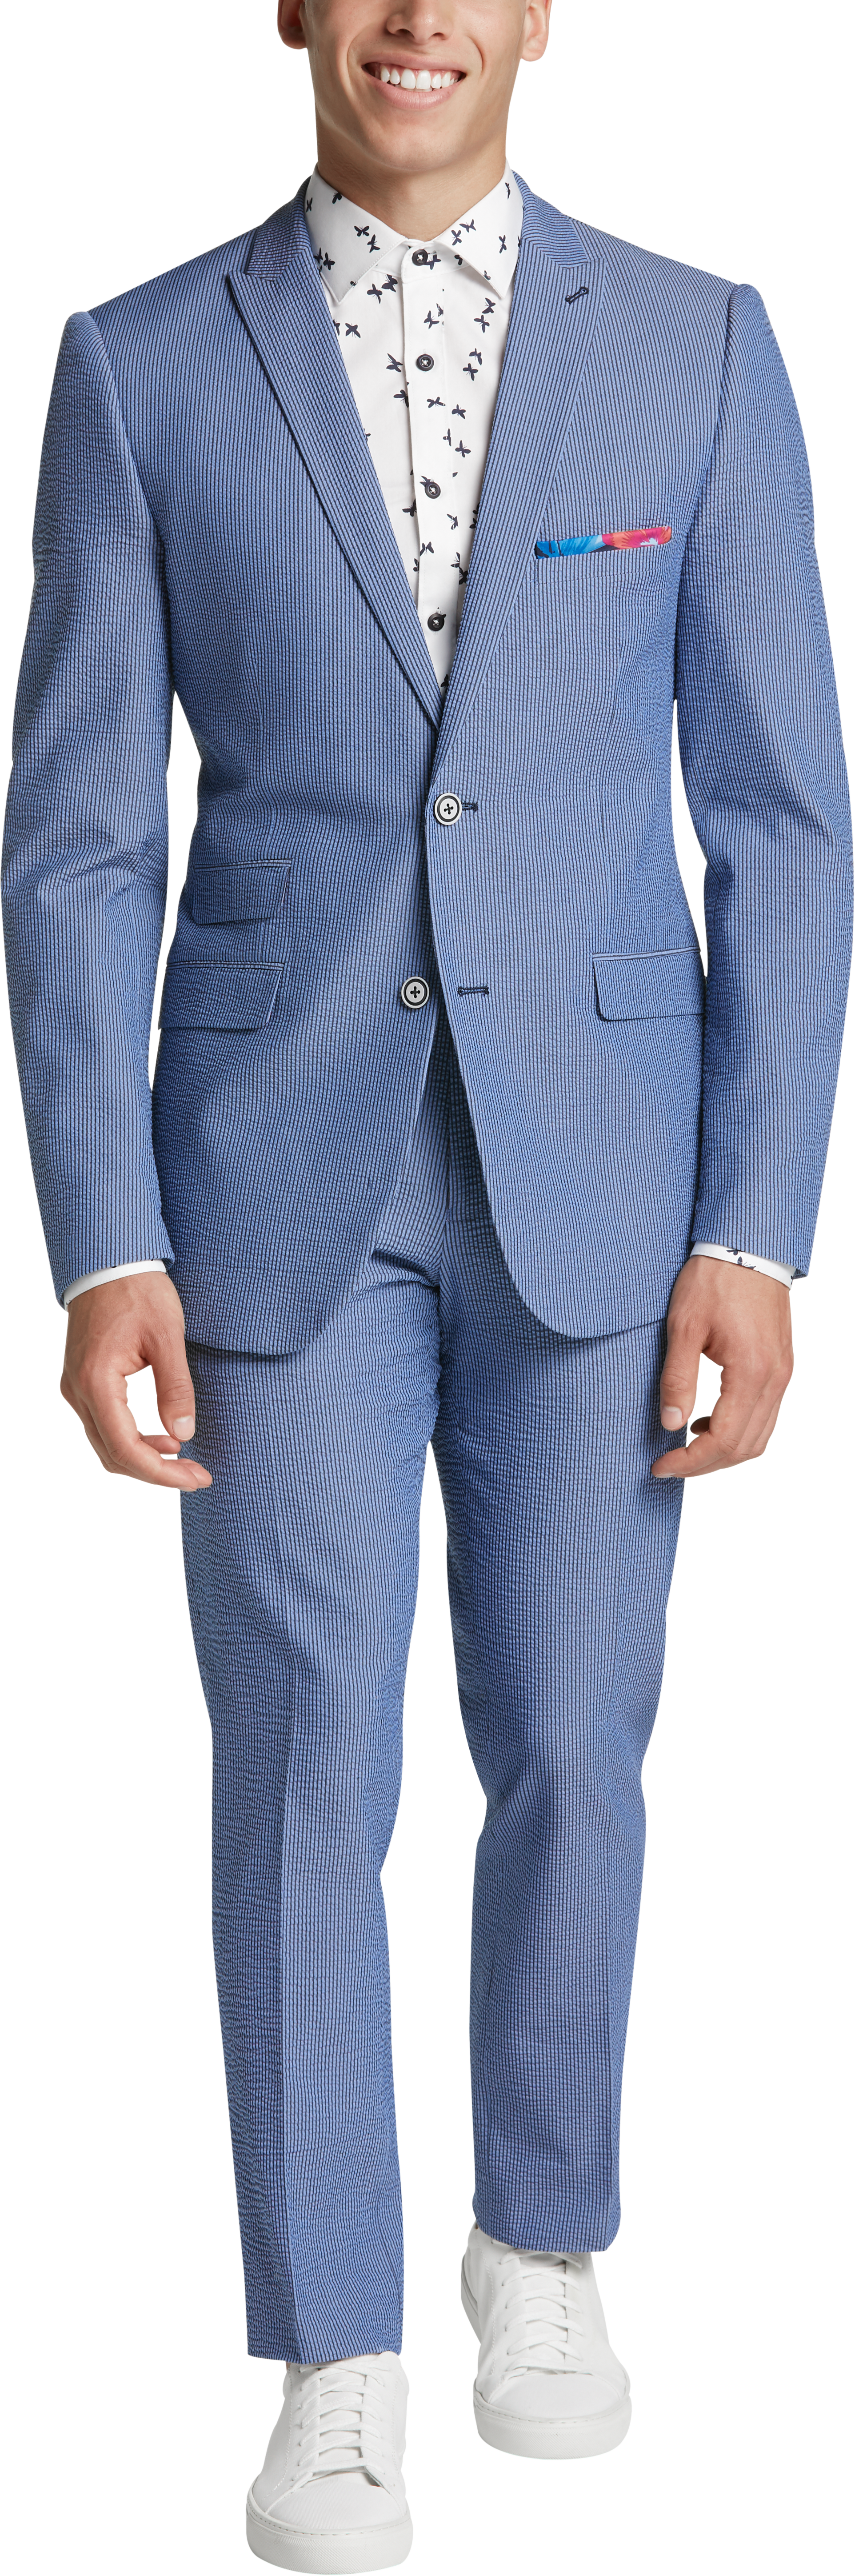 Paisley & Gray Slim Fit Suit Separates Coat, Blue Seersucker Stripe ...